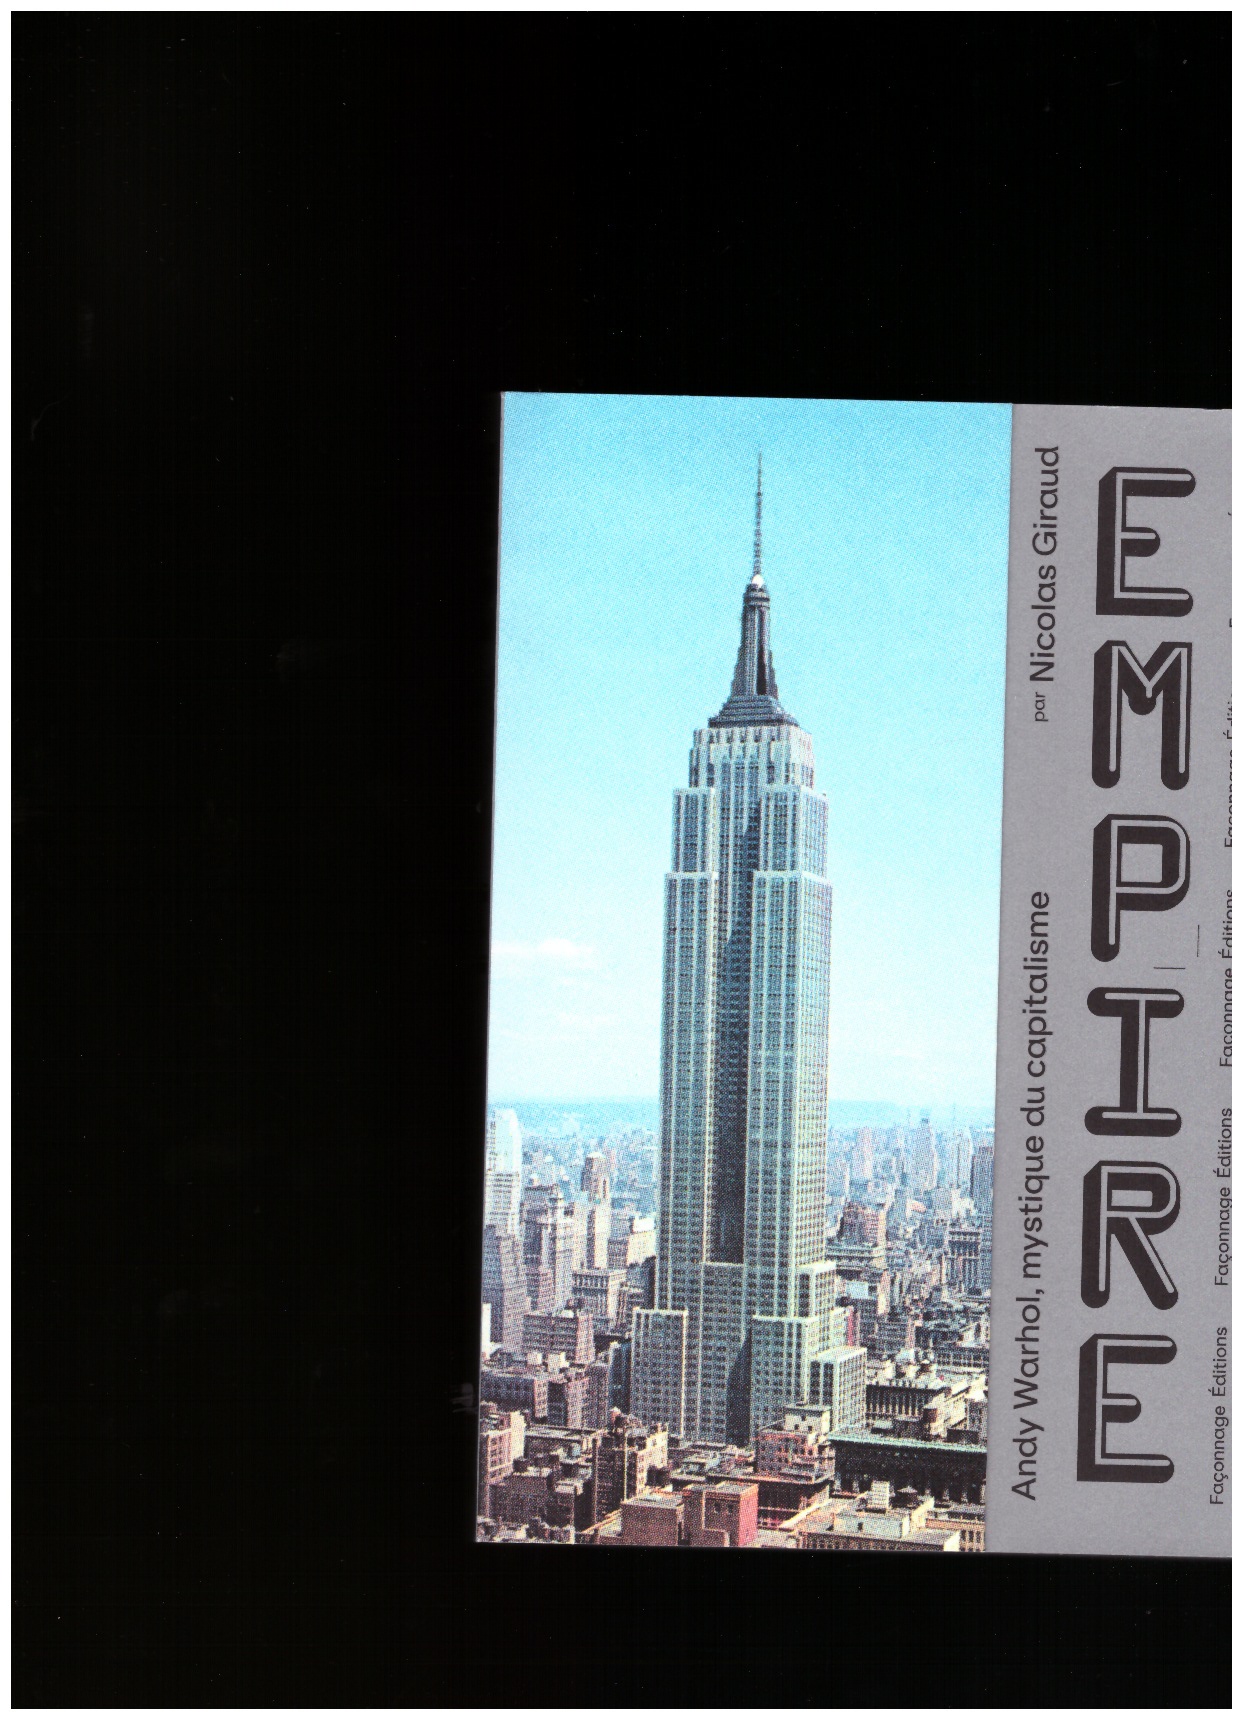 GIRAUD, Nicolas - Empire: Andy Warhol, mystique du capitalisme